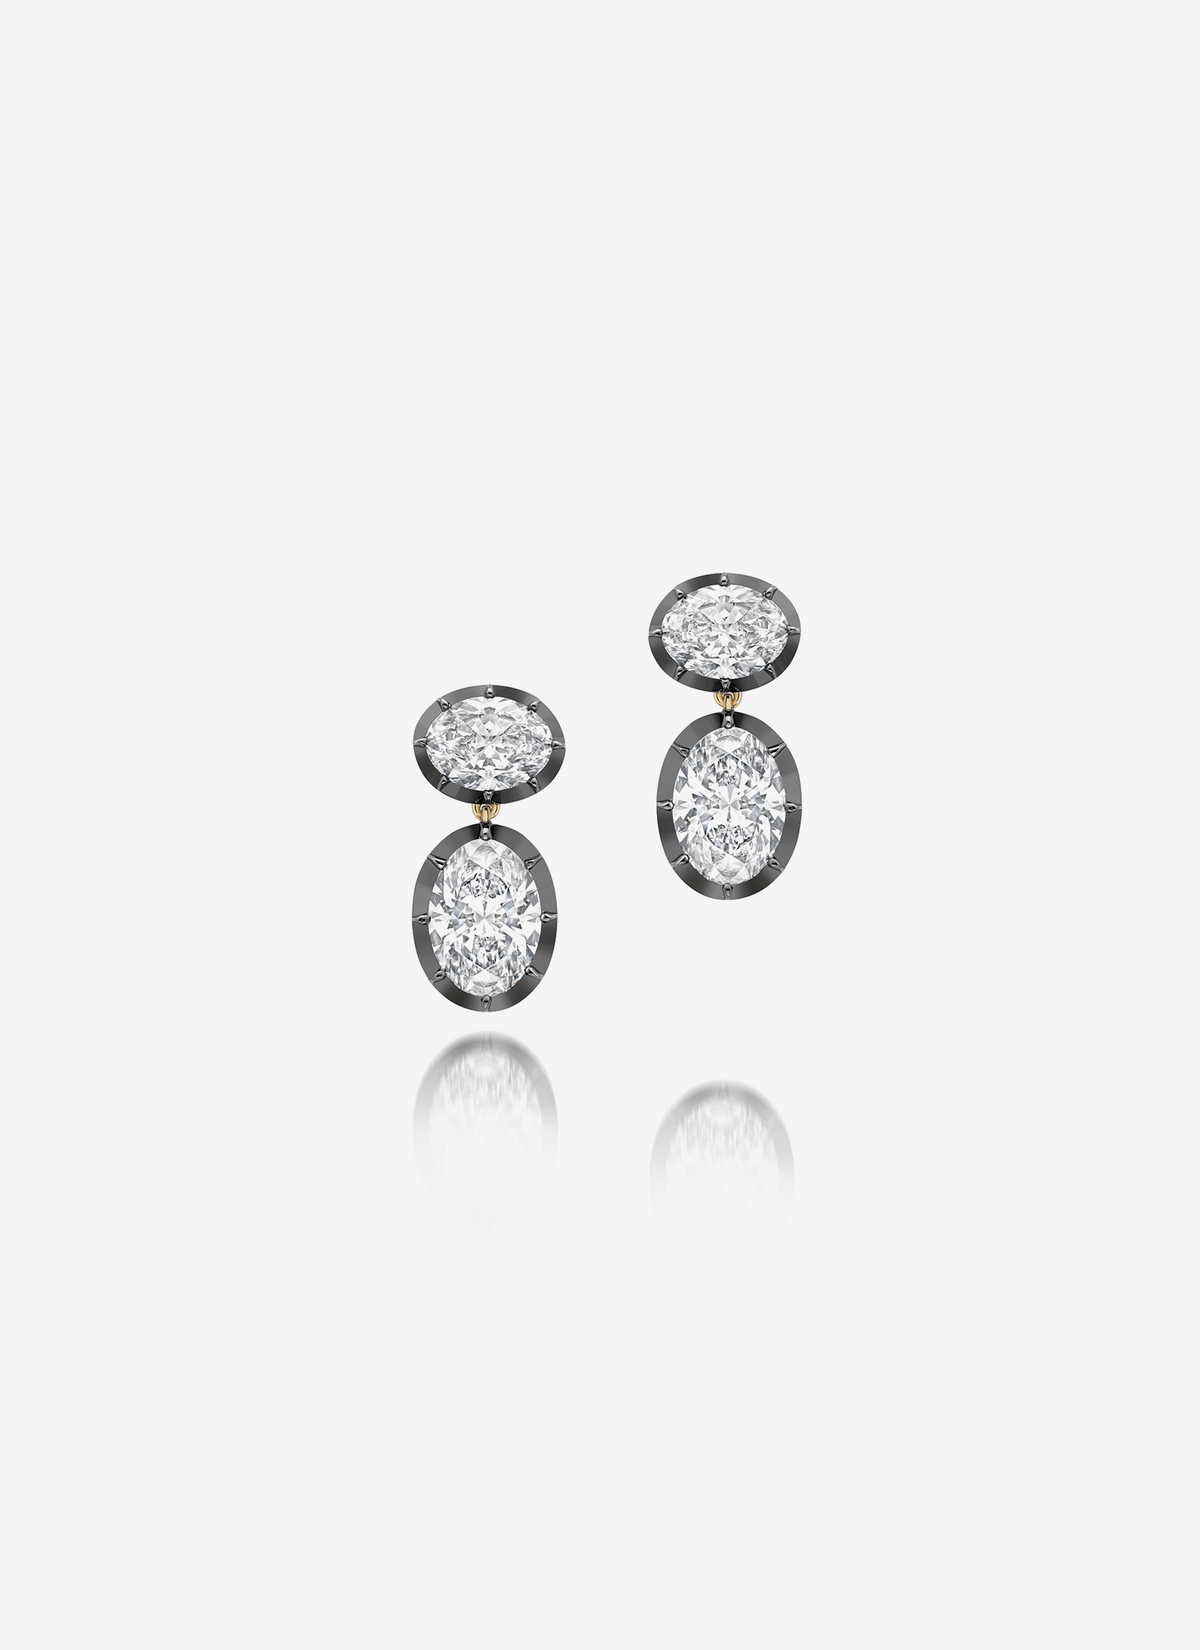 All Directions Oval Diamond Earrings